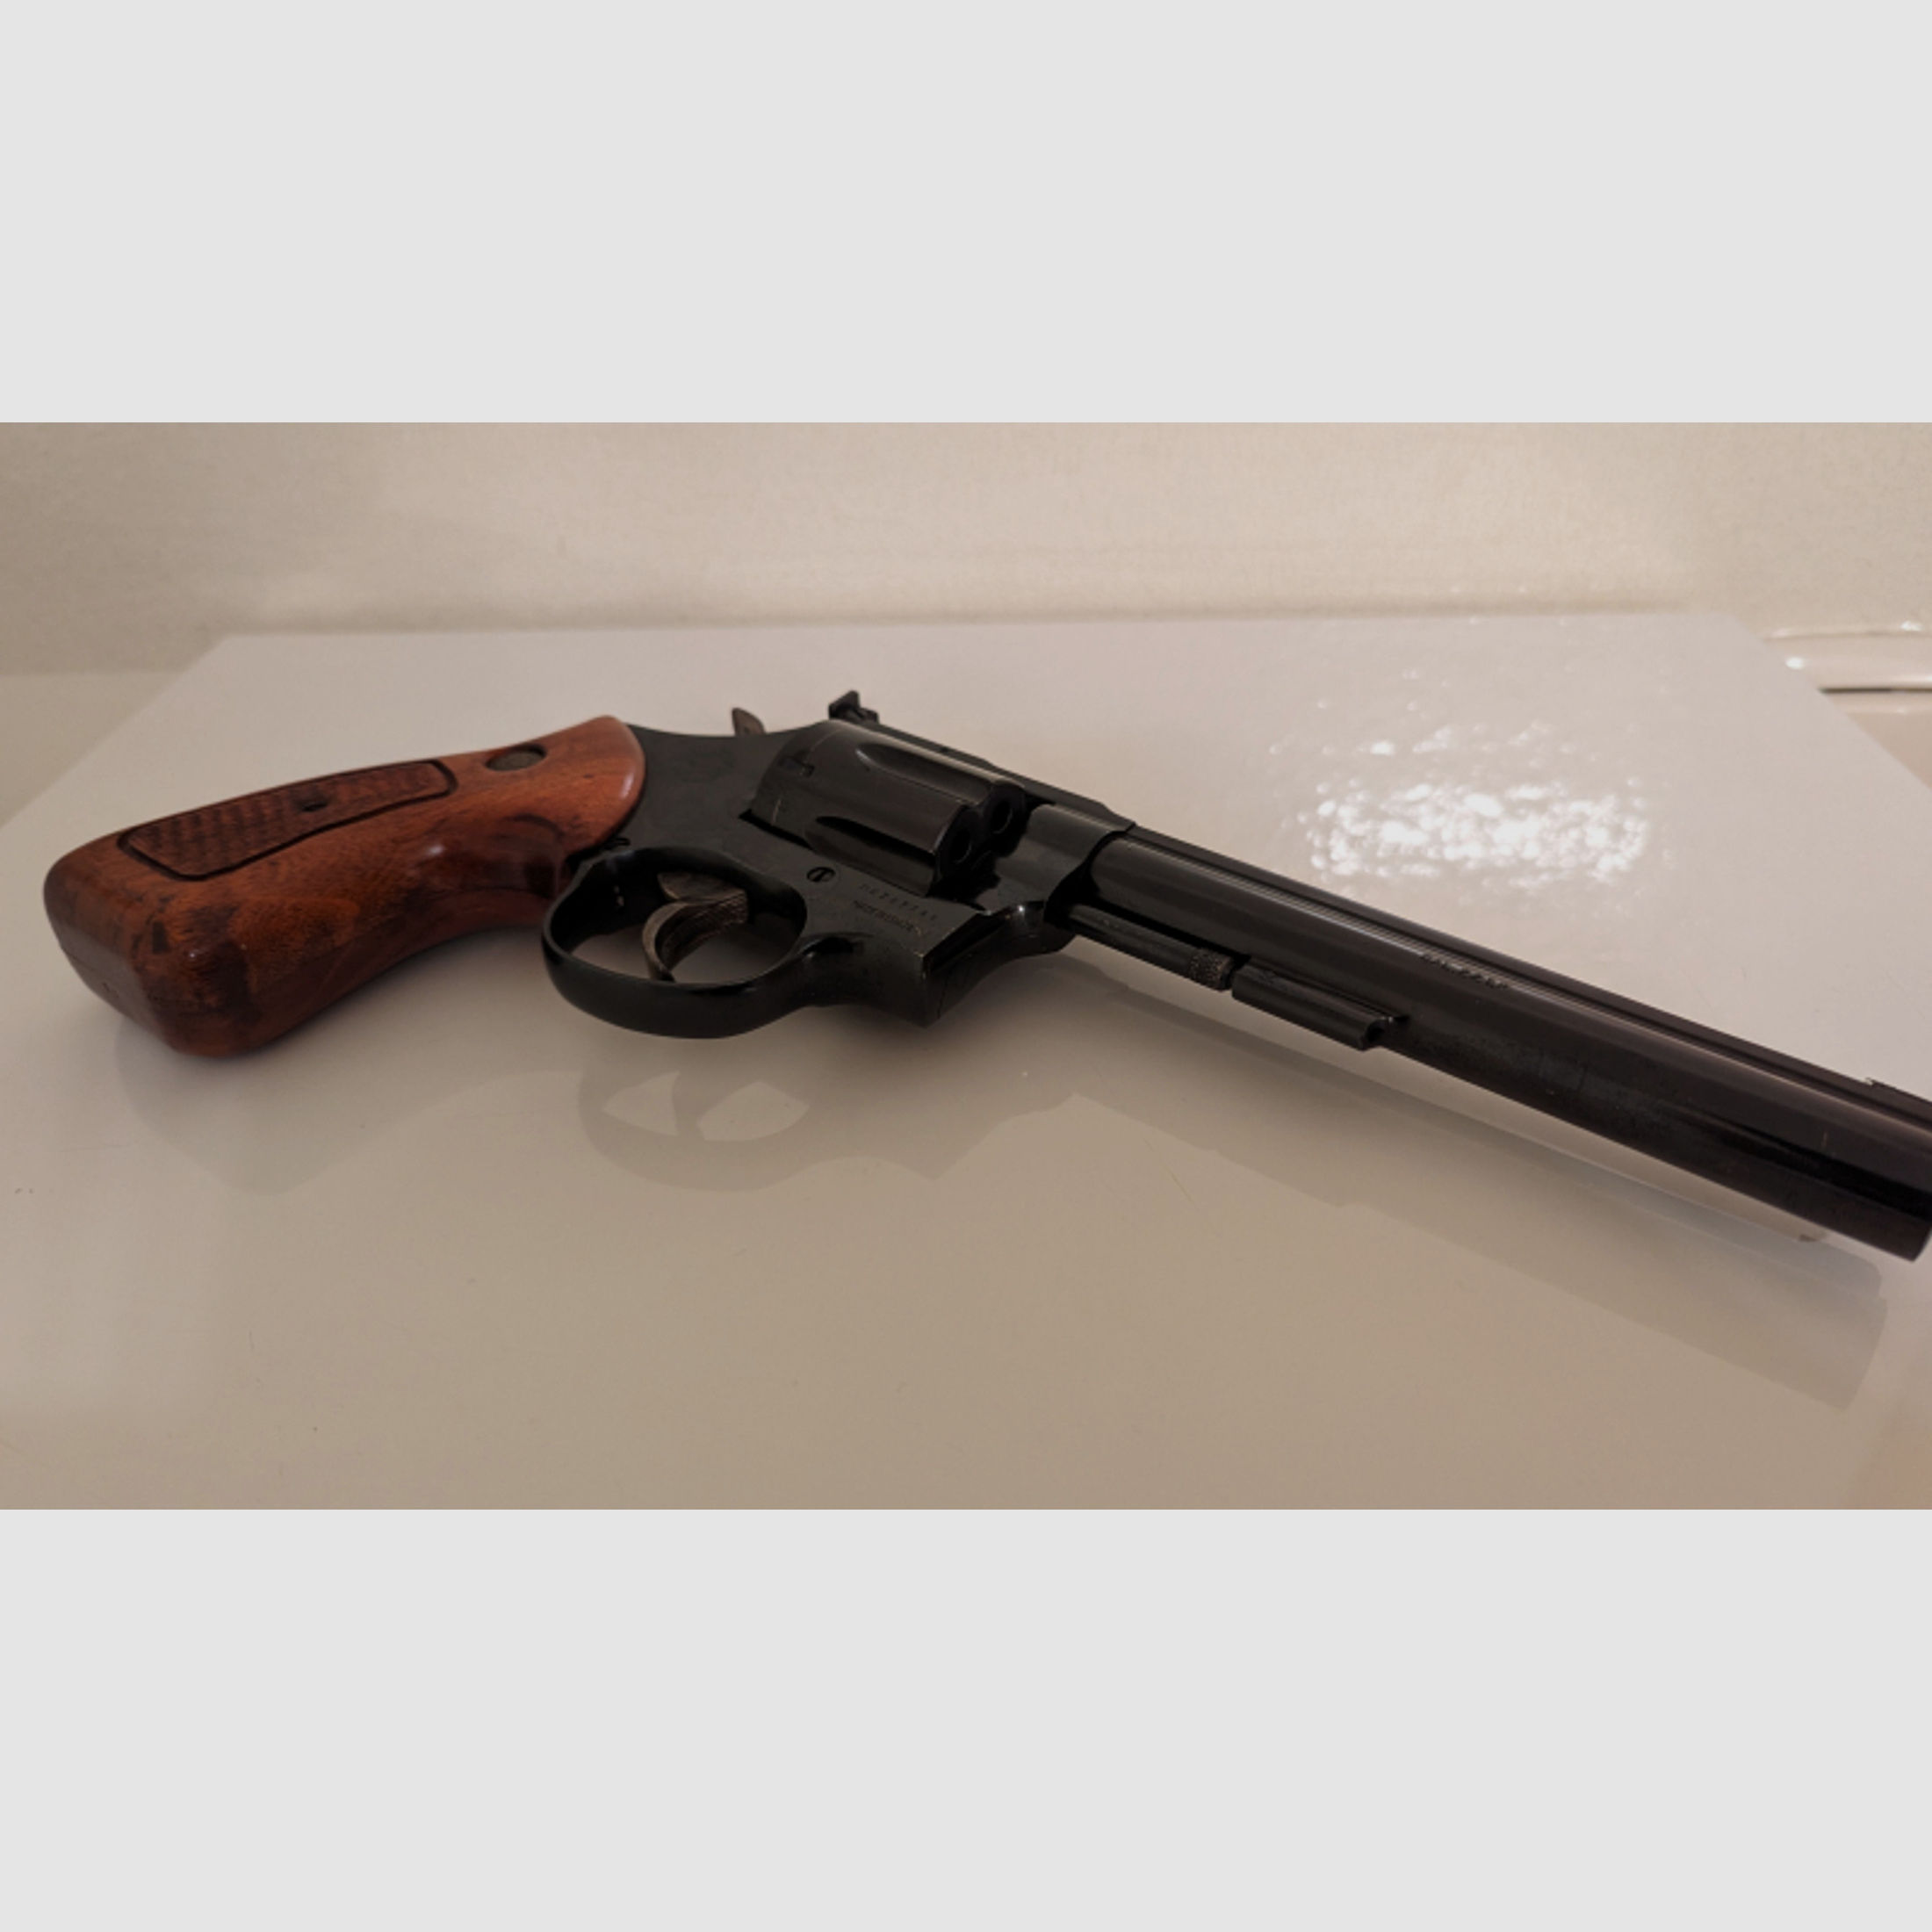 Taurus 96 Revolver in 22lr